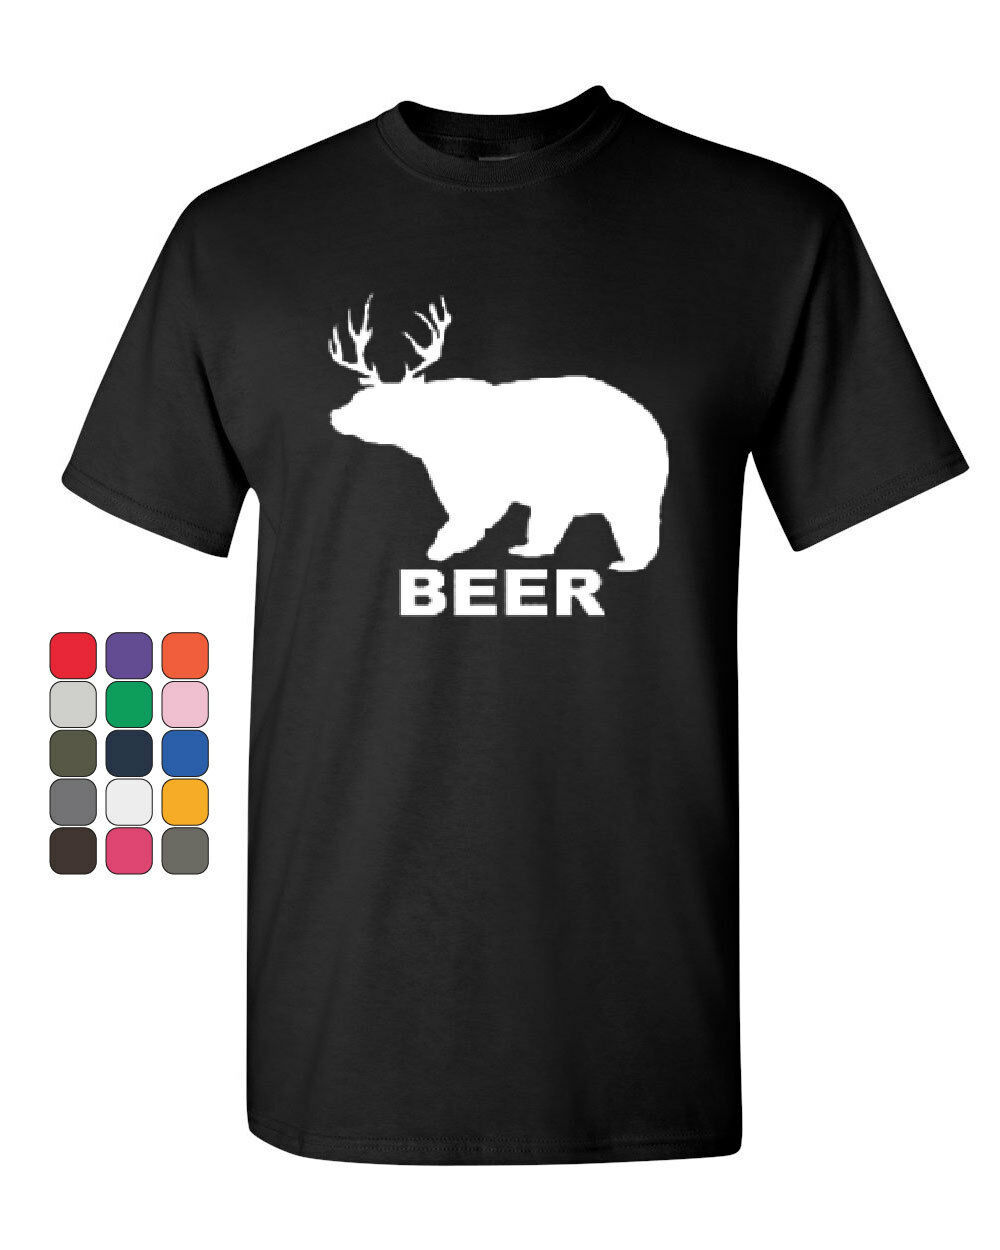 Bear + Deer = Beer Funny Drinking T-Shirt Beer Tee Shirt